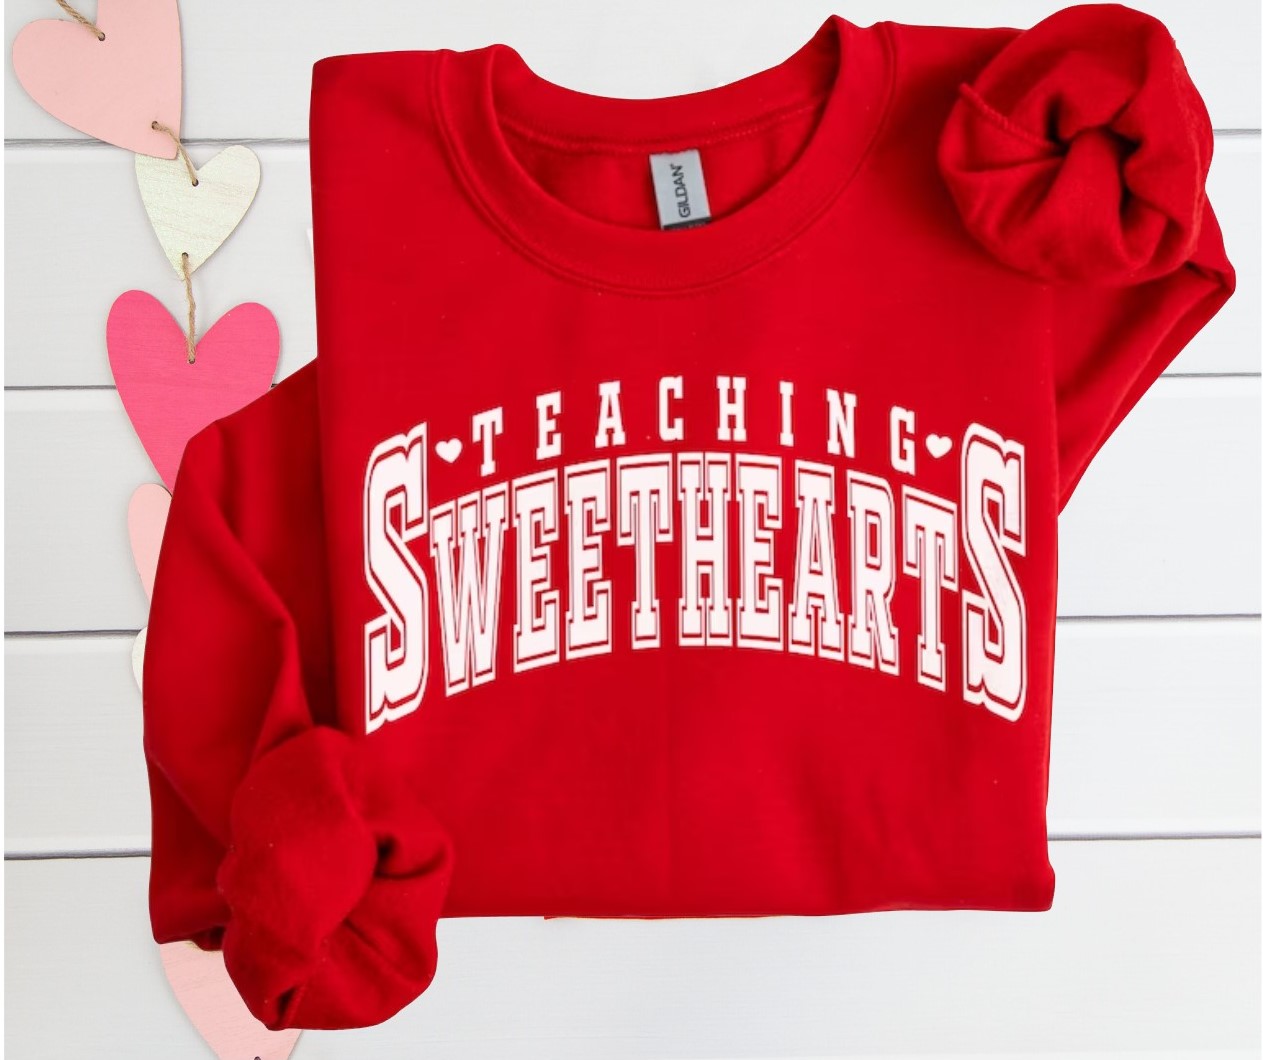 Teaching Sweethearts Sweatshirt/Tee